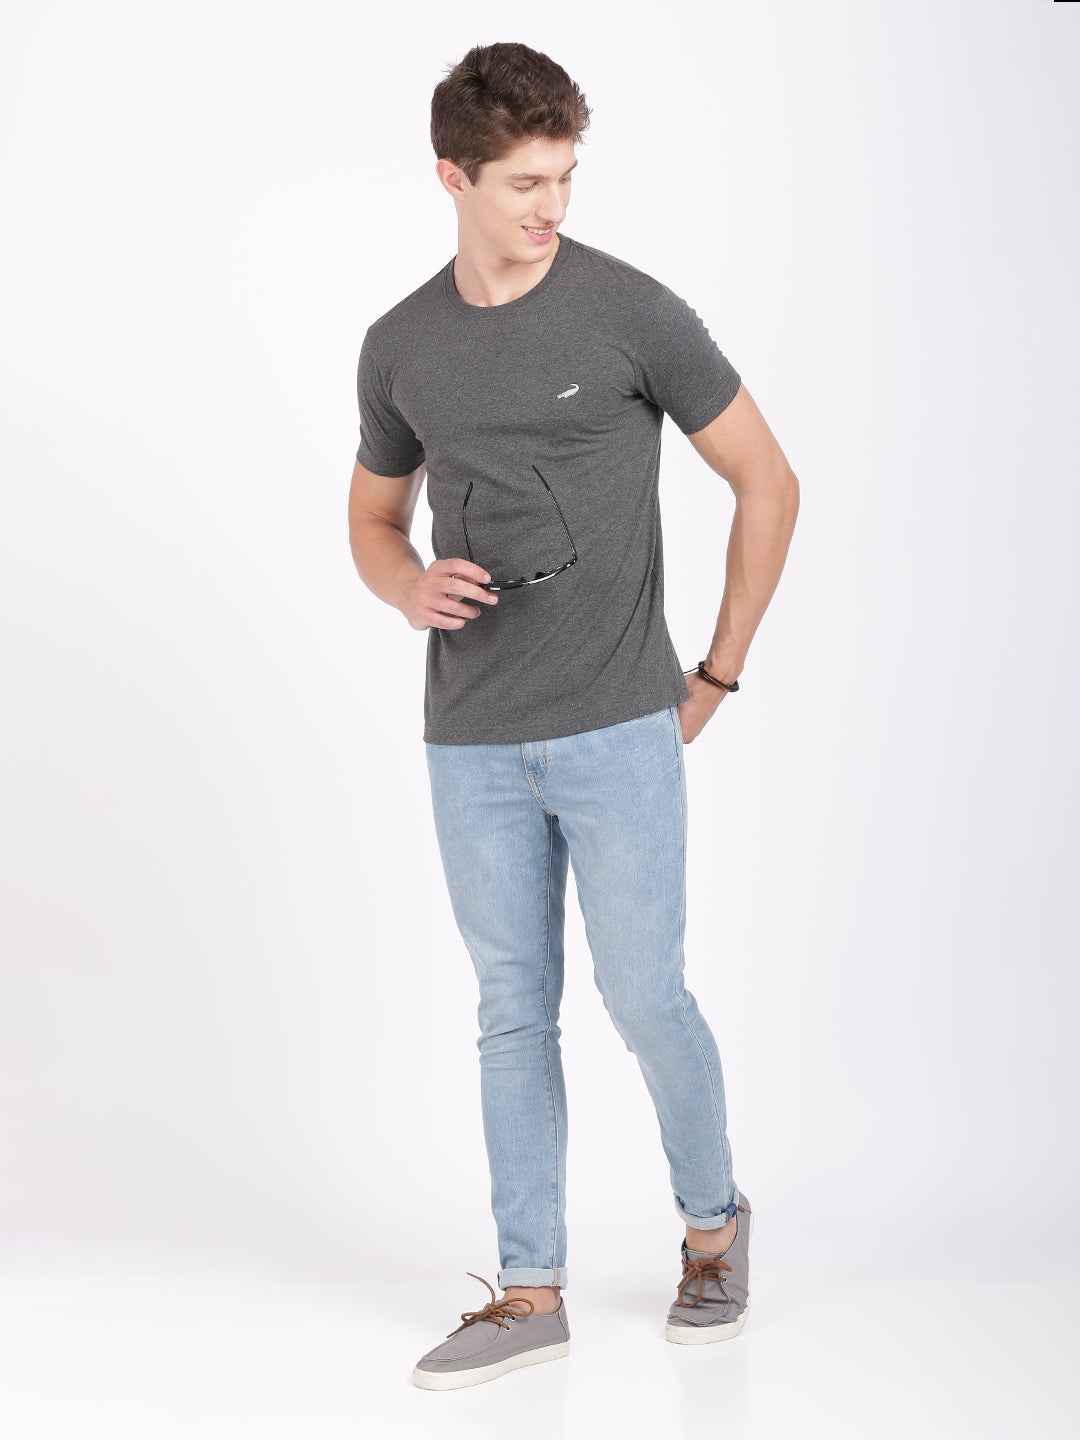 Men's Solid Round Neck Half Sleeve Cotton T-Shirt - CHARCOAL MELANGE